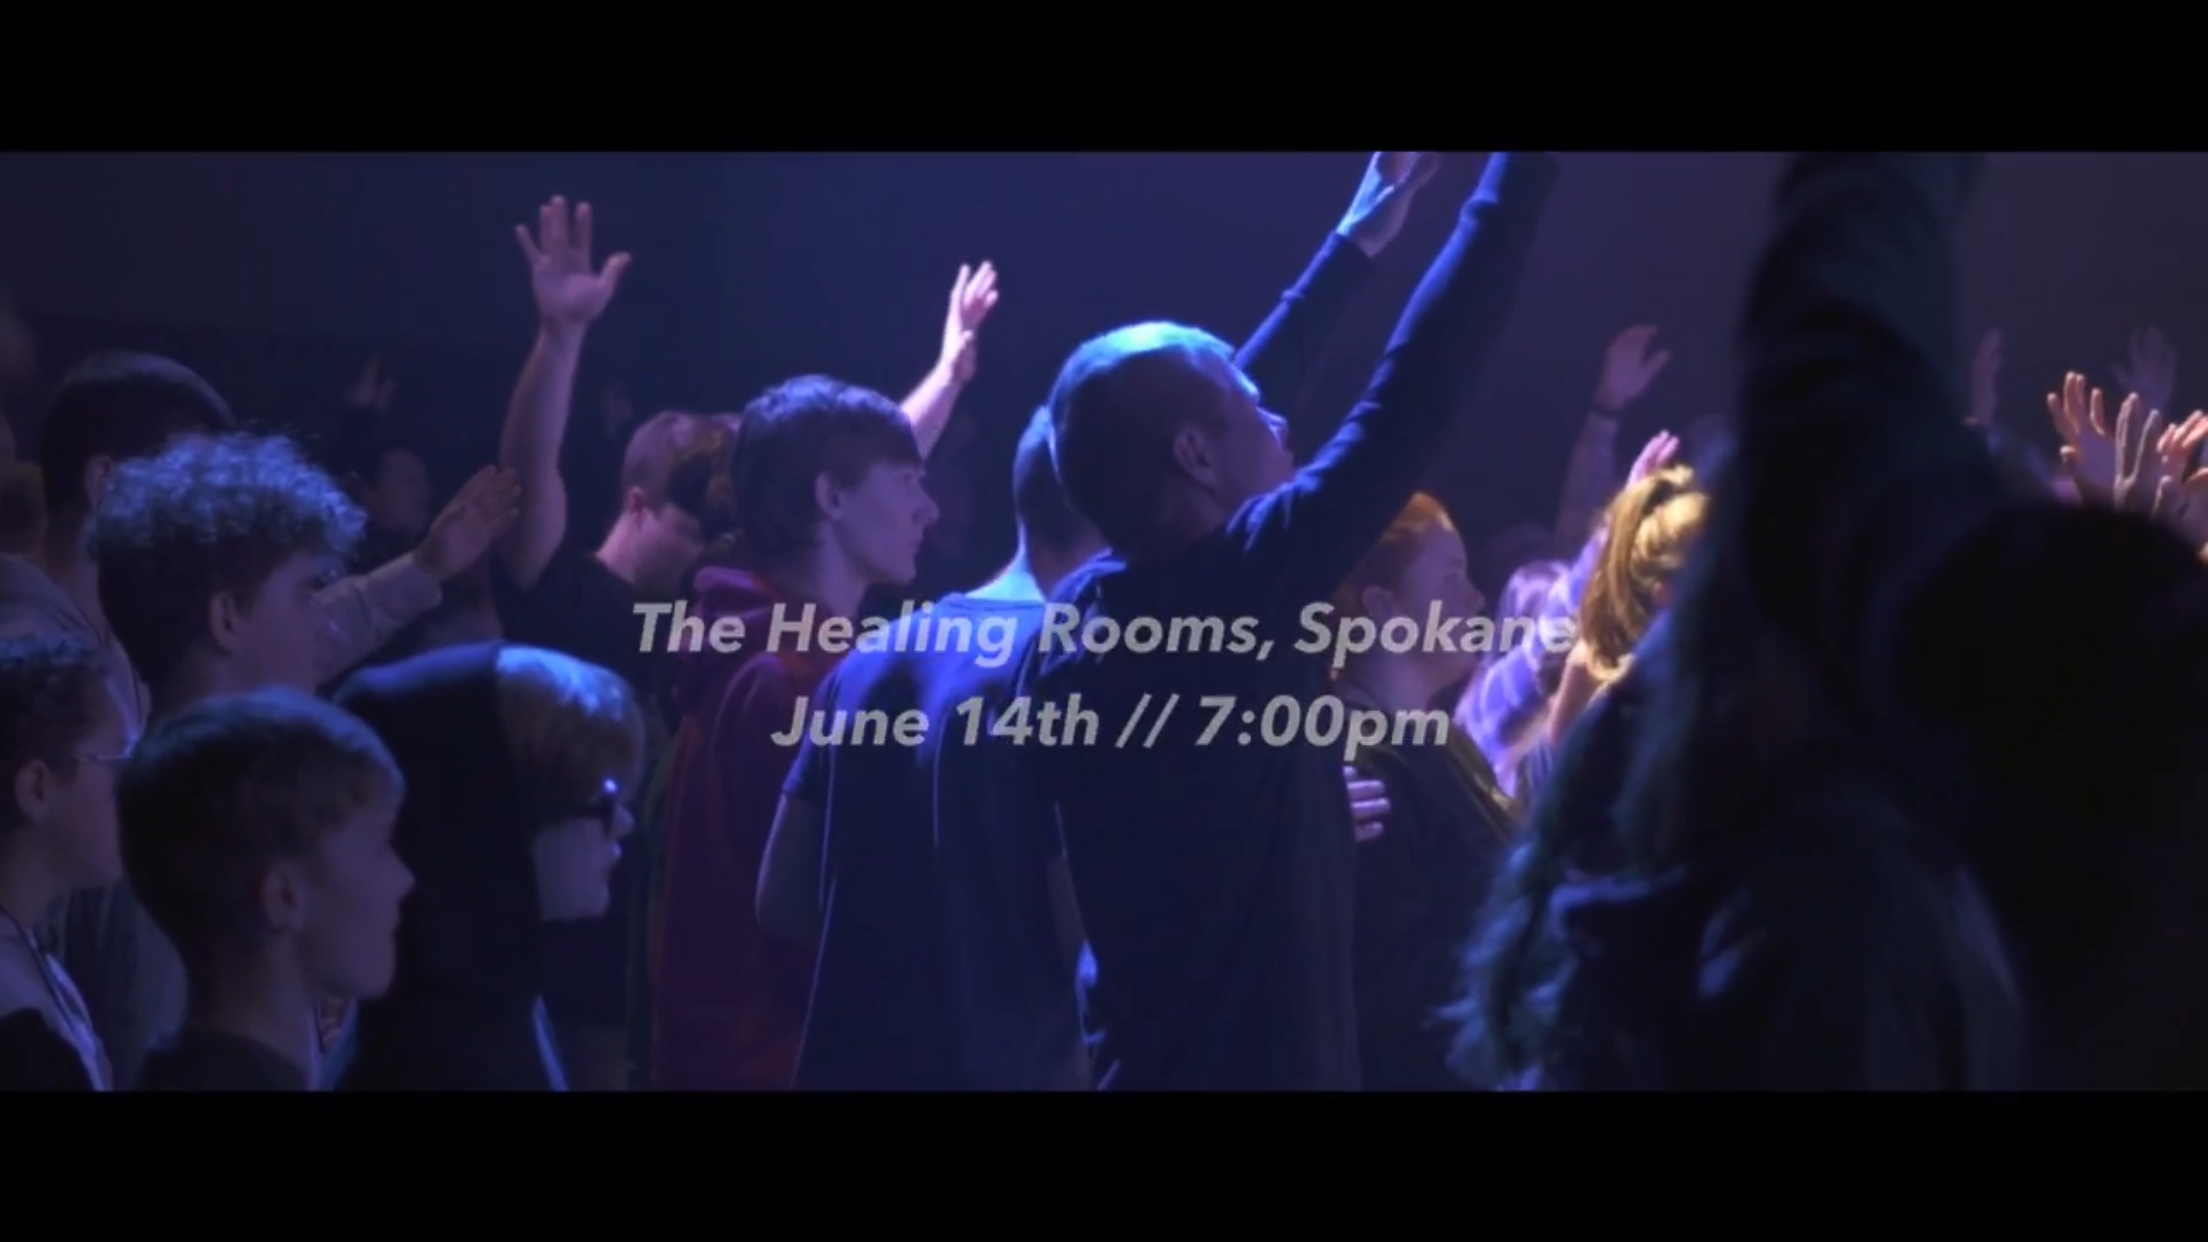 Healing Rooms Event Details